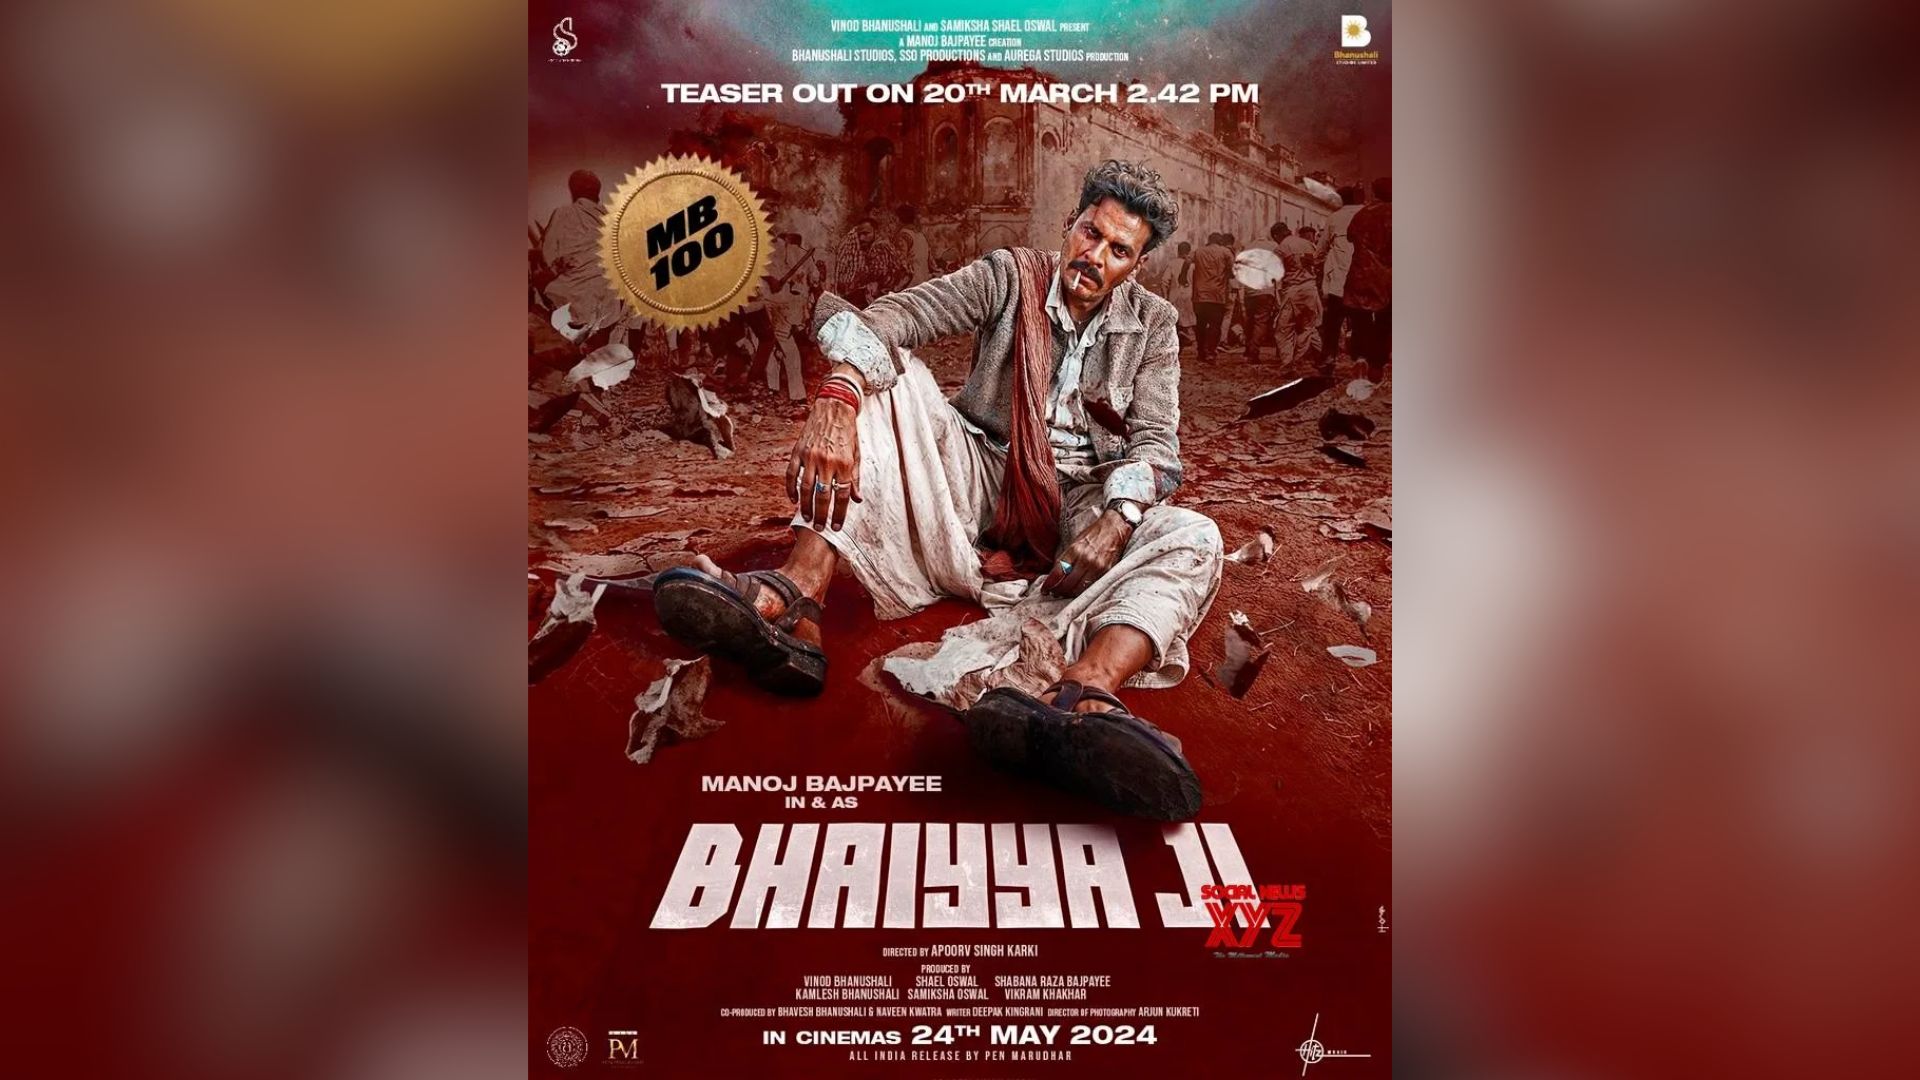 Manoj Bajpayee’s ‘Bhaiyya Ji’ teaser out now